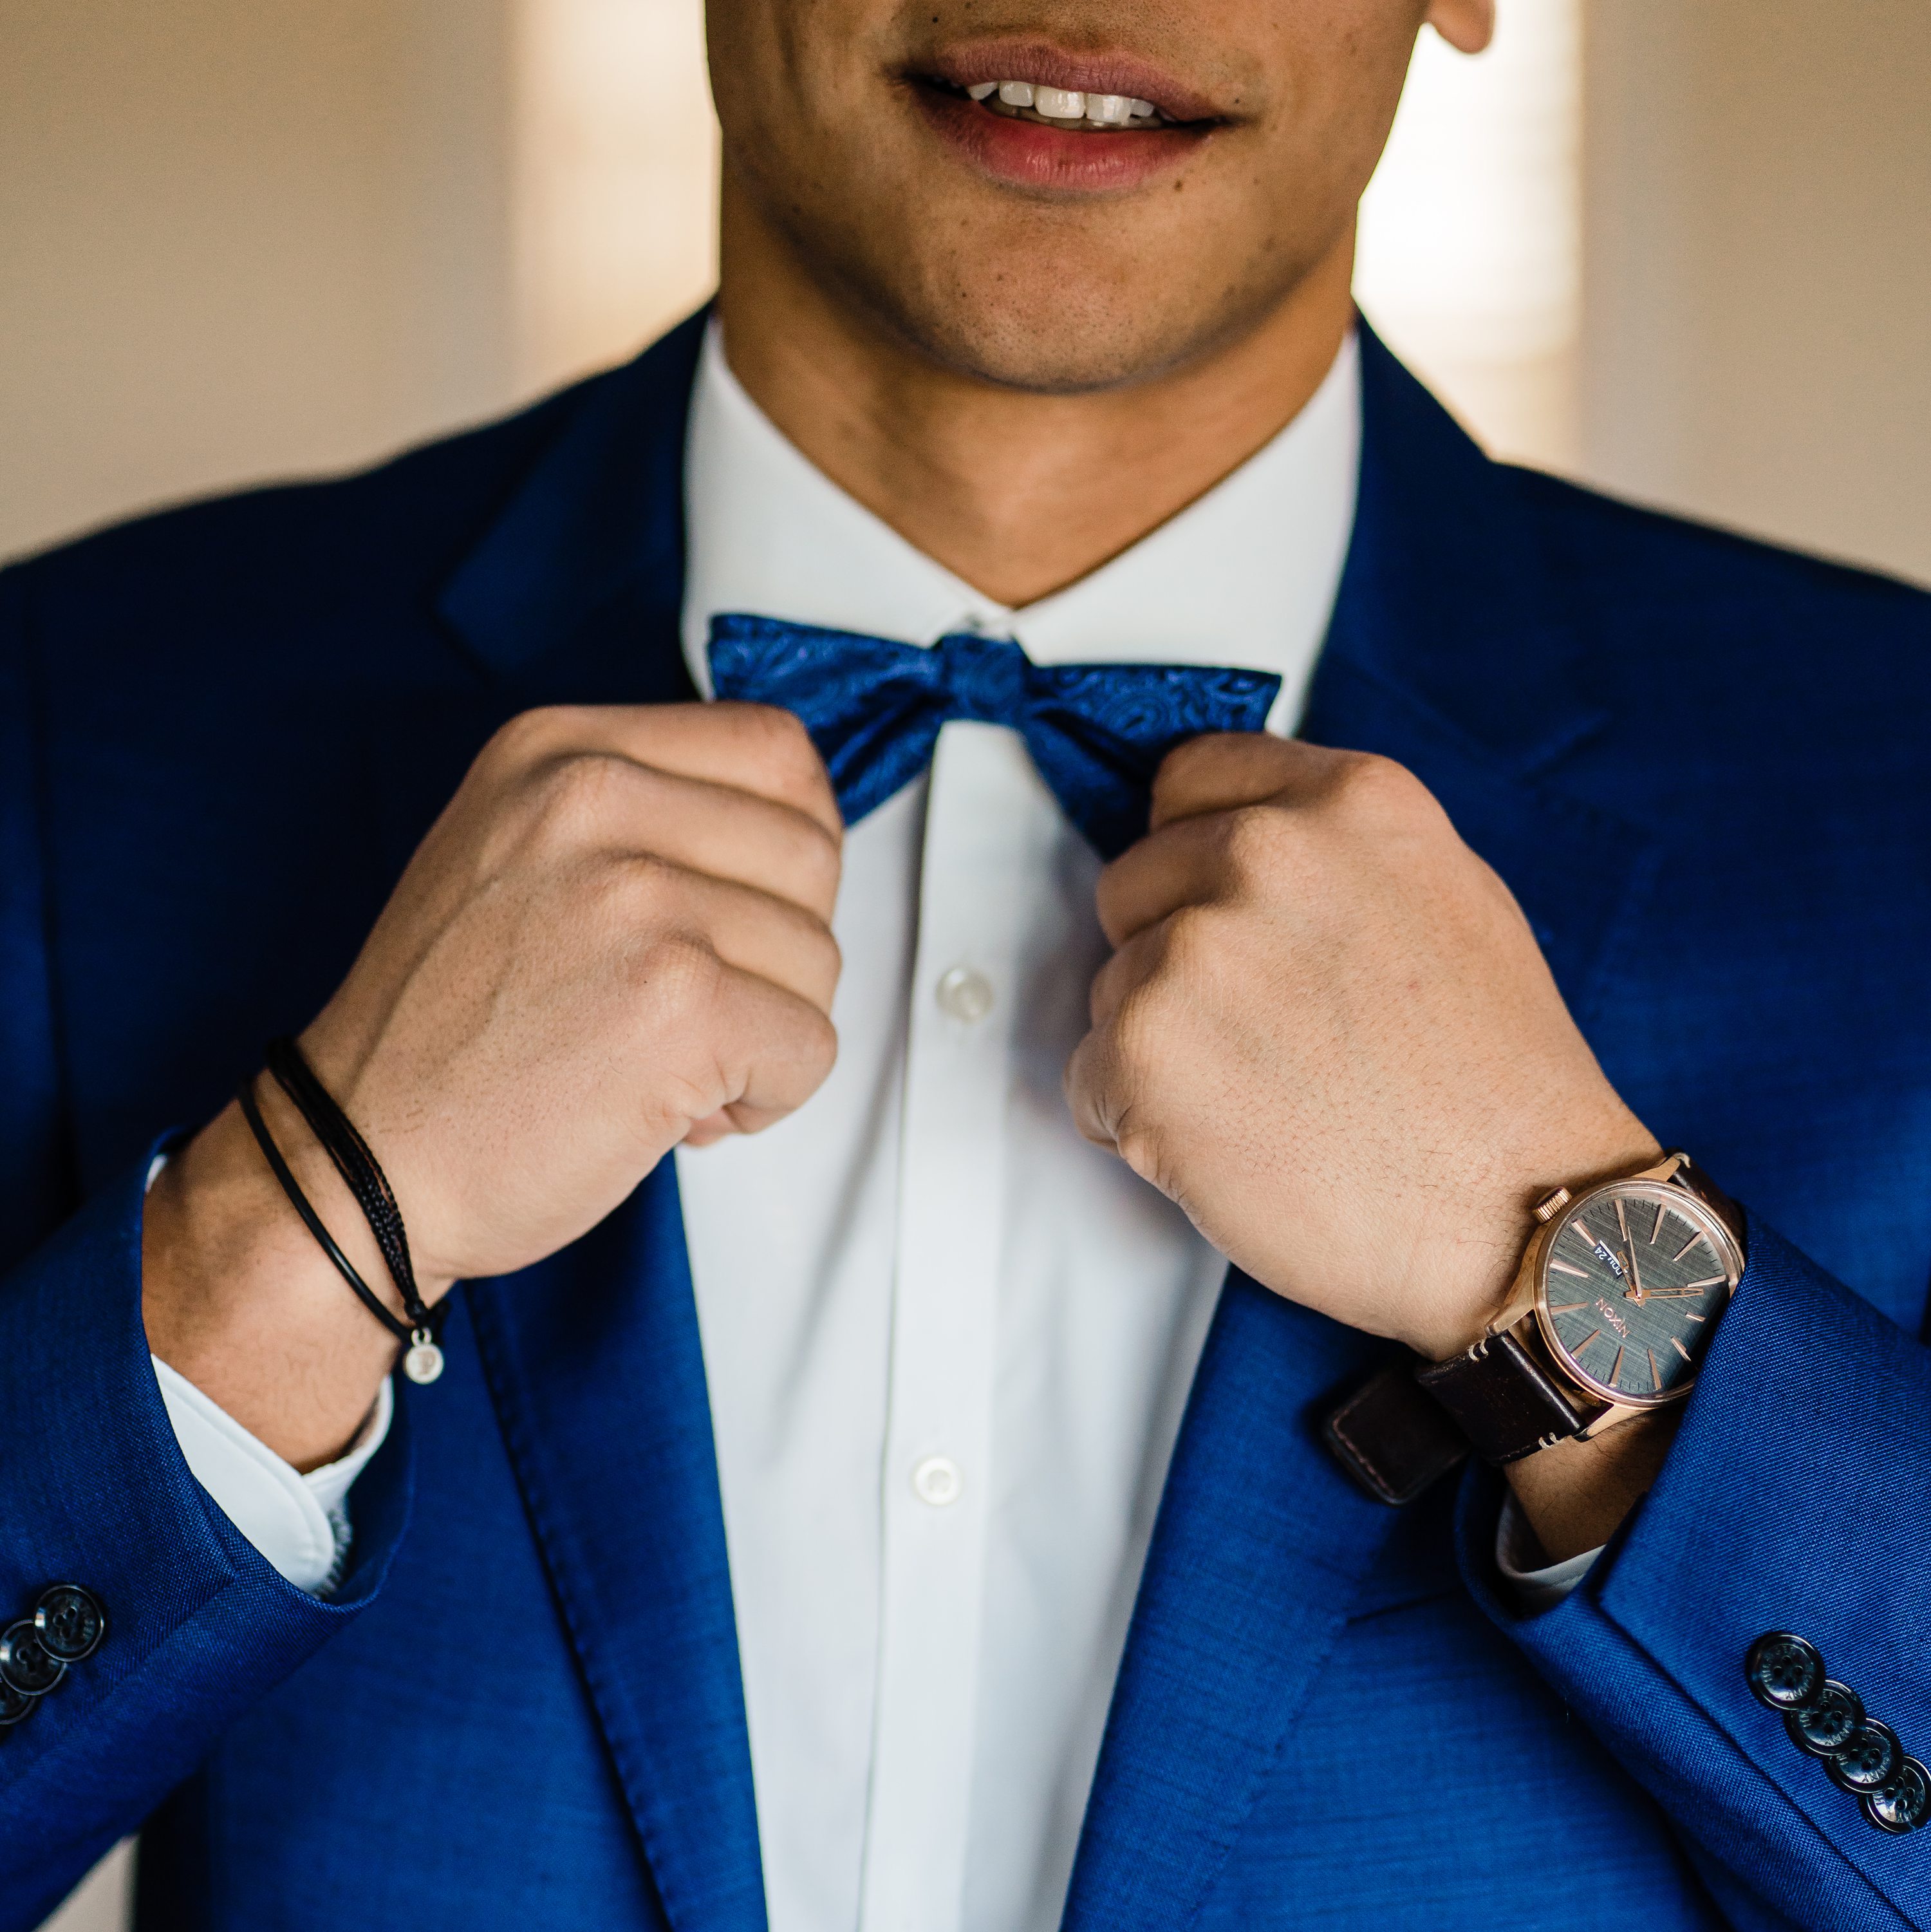 boston wedding photography,blue suit for wedding,groom details,blue bowtie